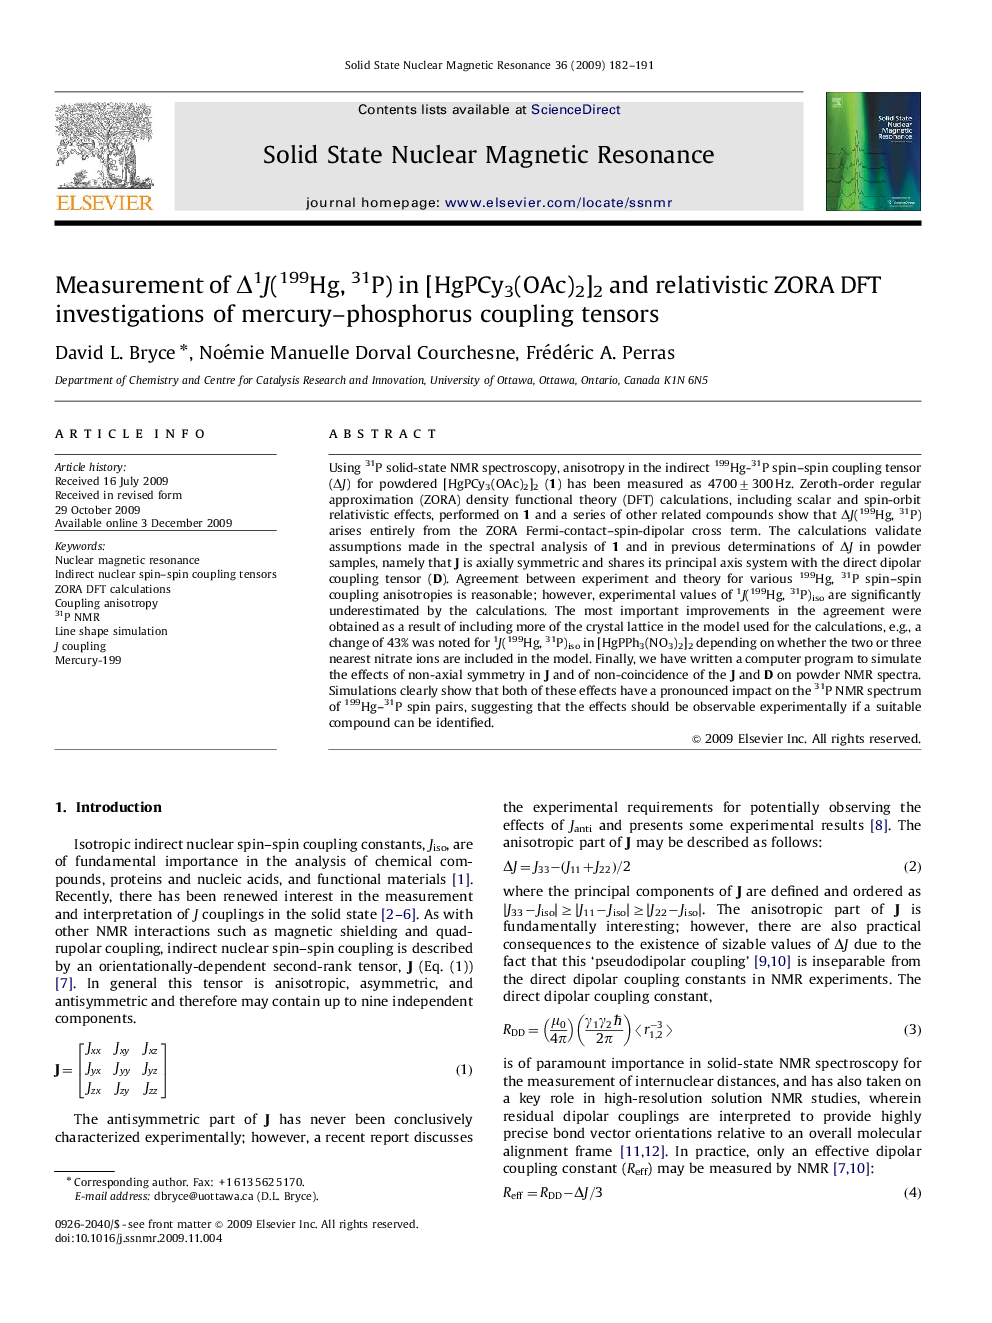 Measurement of Î1J(199Hg, 31P) in [HgPCy3(OAc)2]2 and relativistic ZORA DFT investigations of mercury-phosphorus coupling tensors